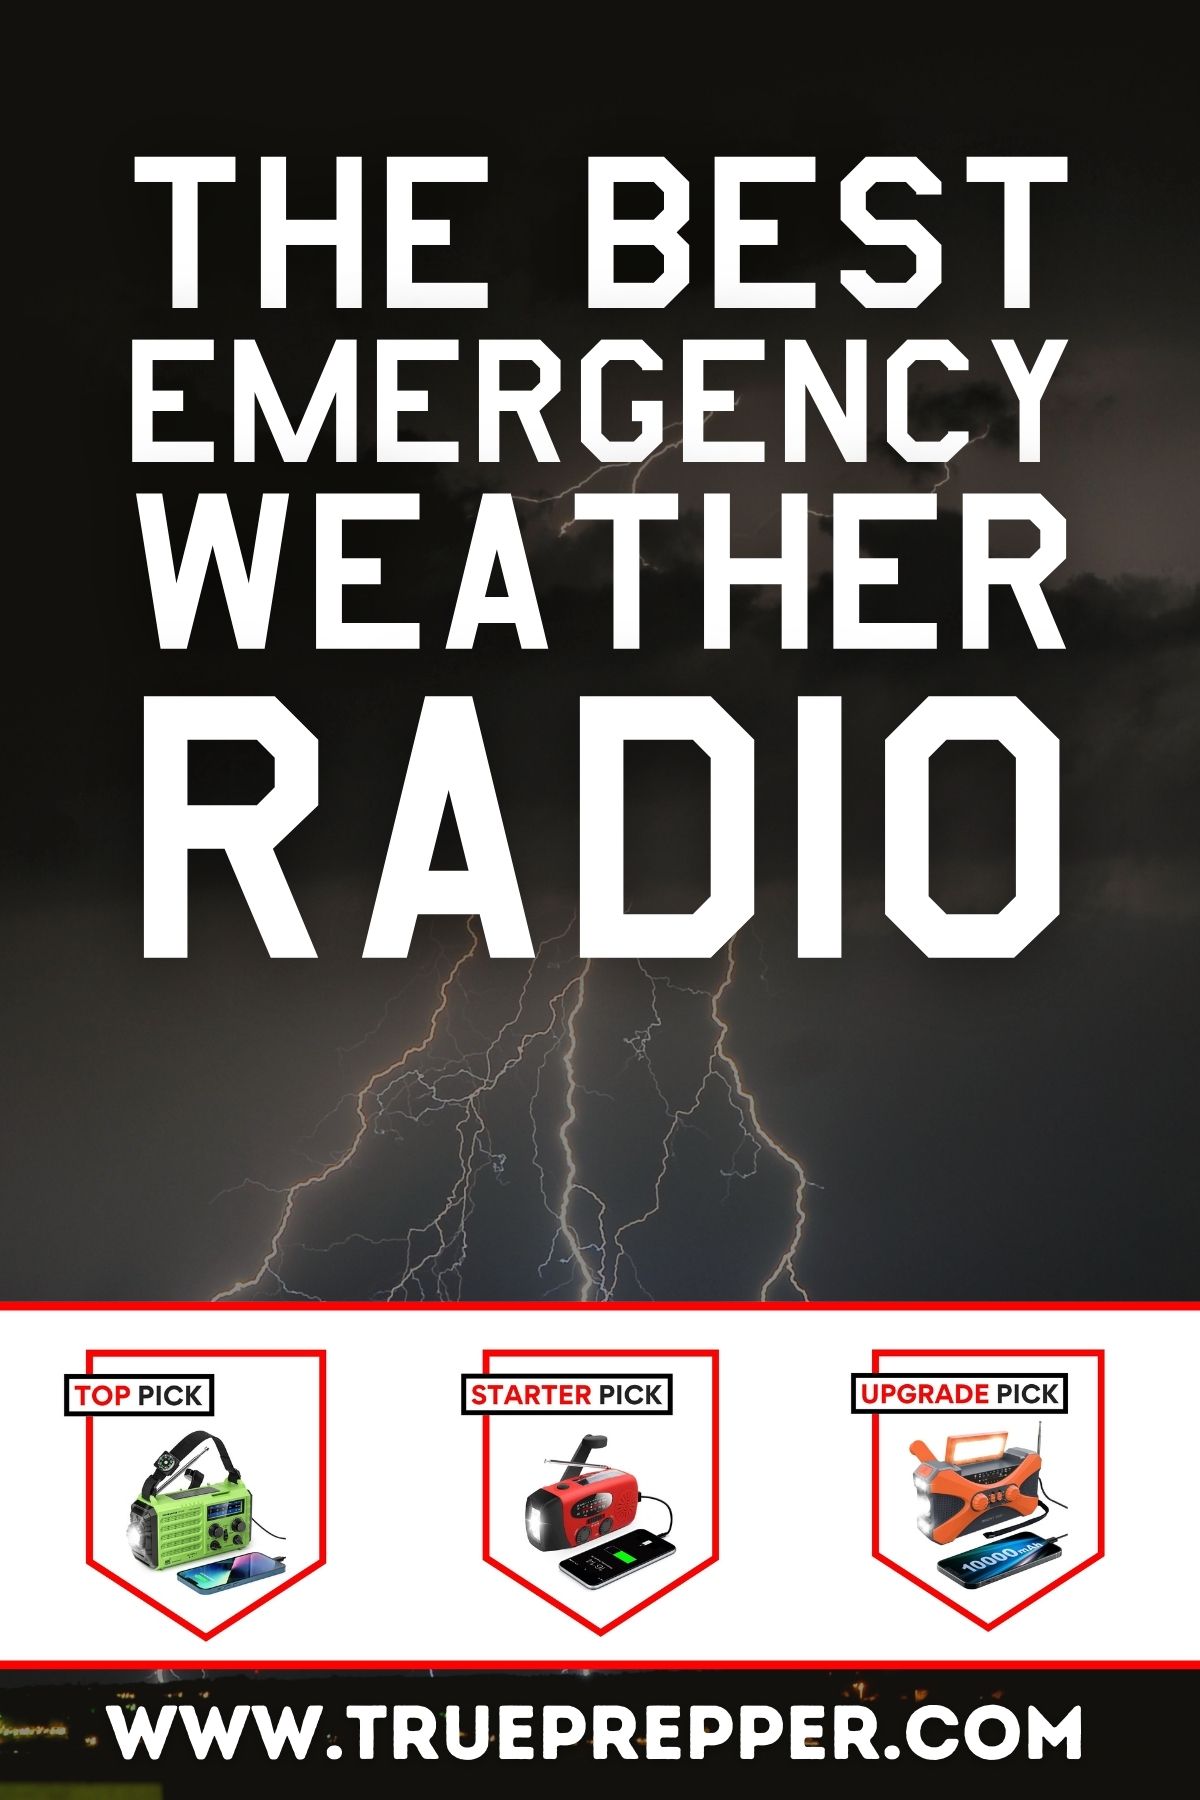 The Best Emergency Weather Radio